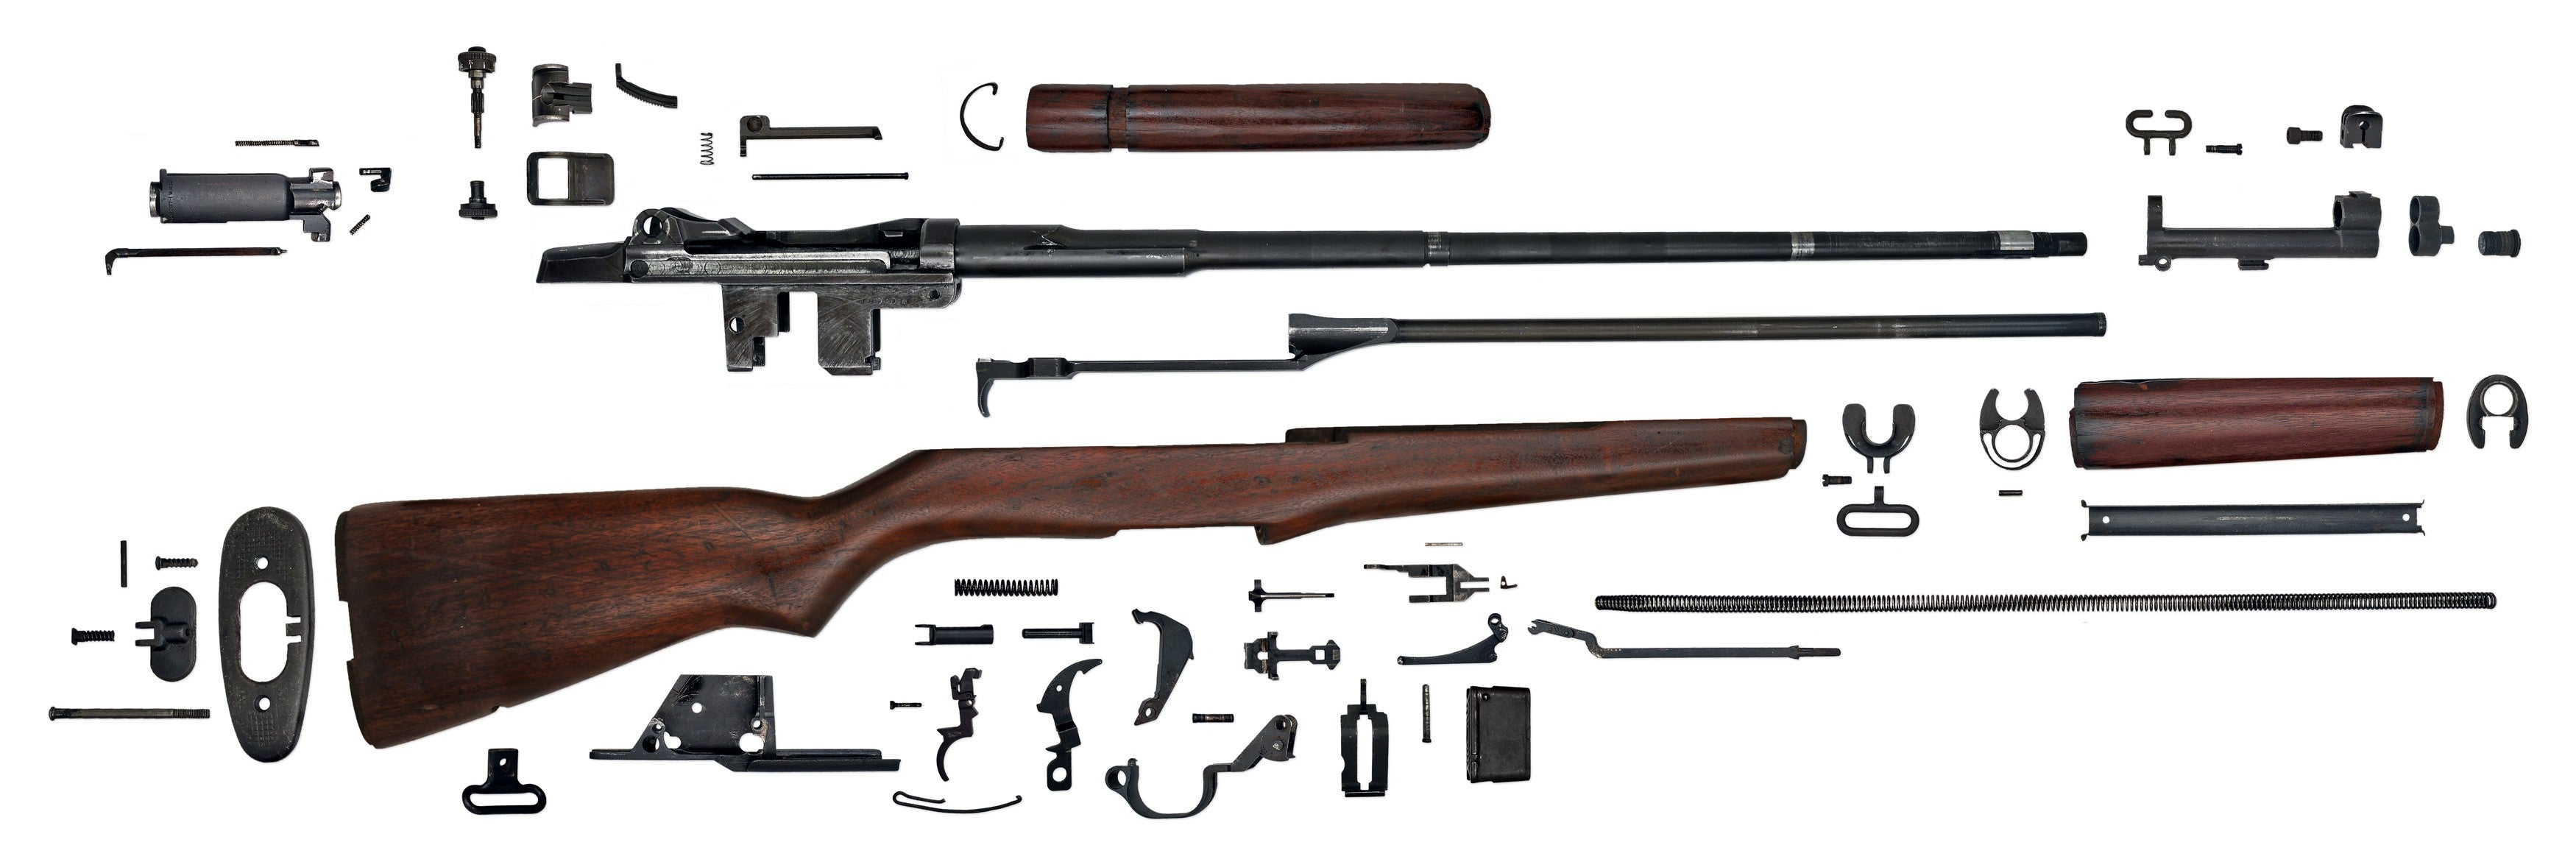 Field Manual M1 Carbine